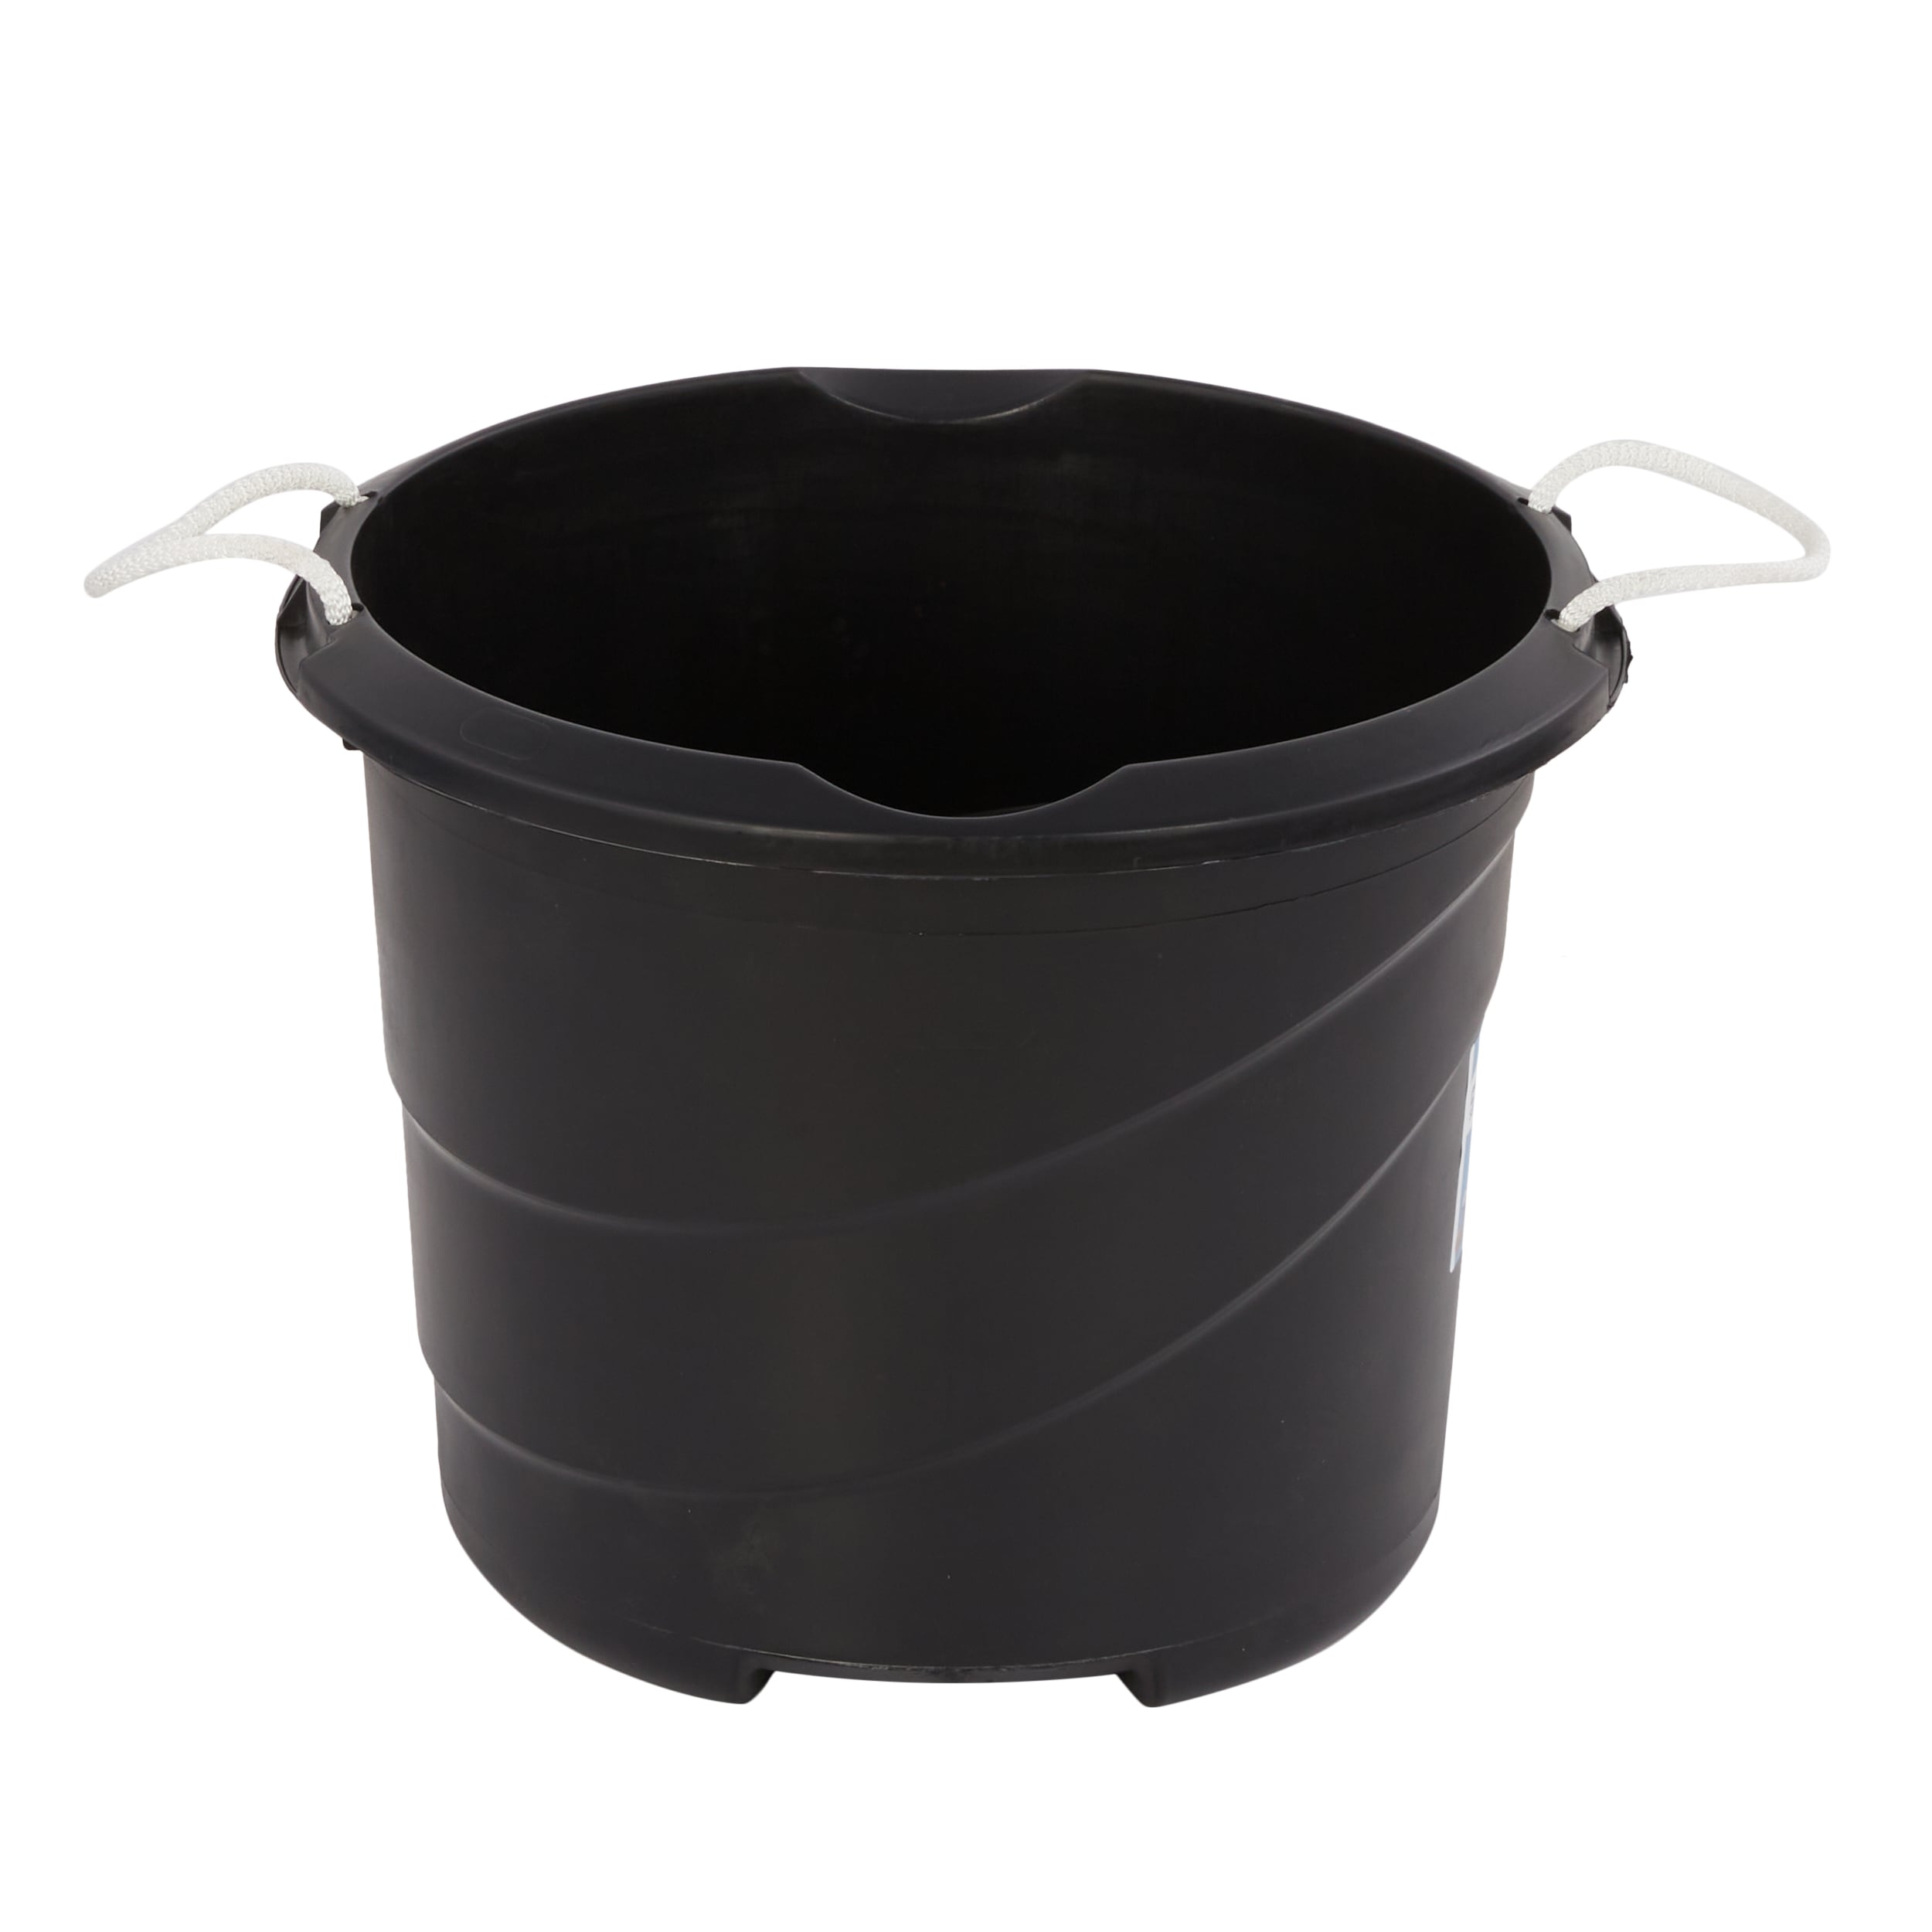 18 Gal. Black Plastic Utility Storage Bucket Tub with Rope Handles (4-Pack)